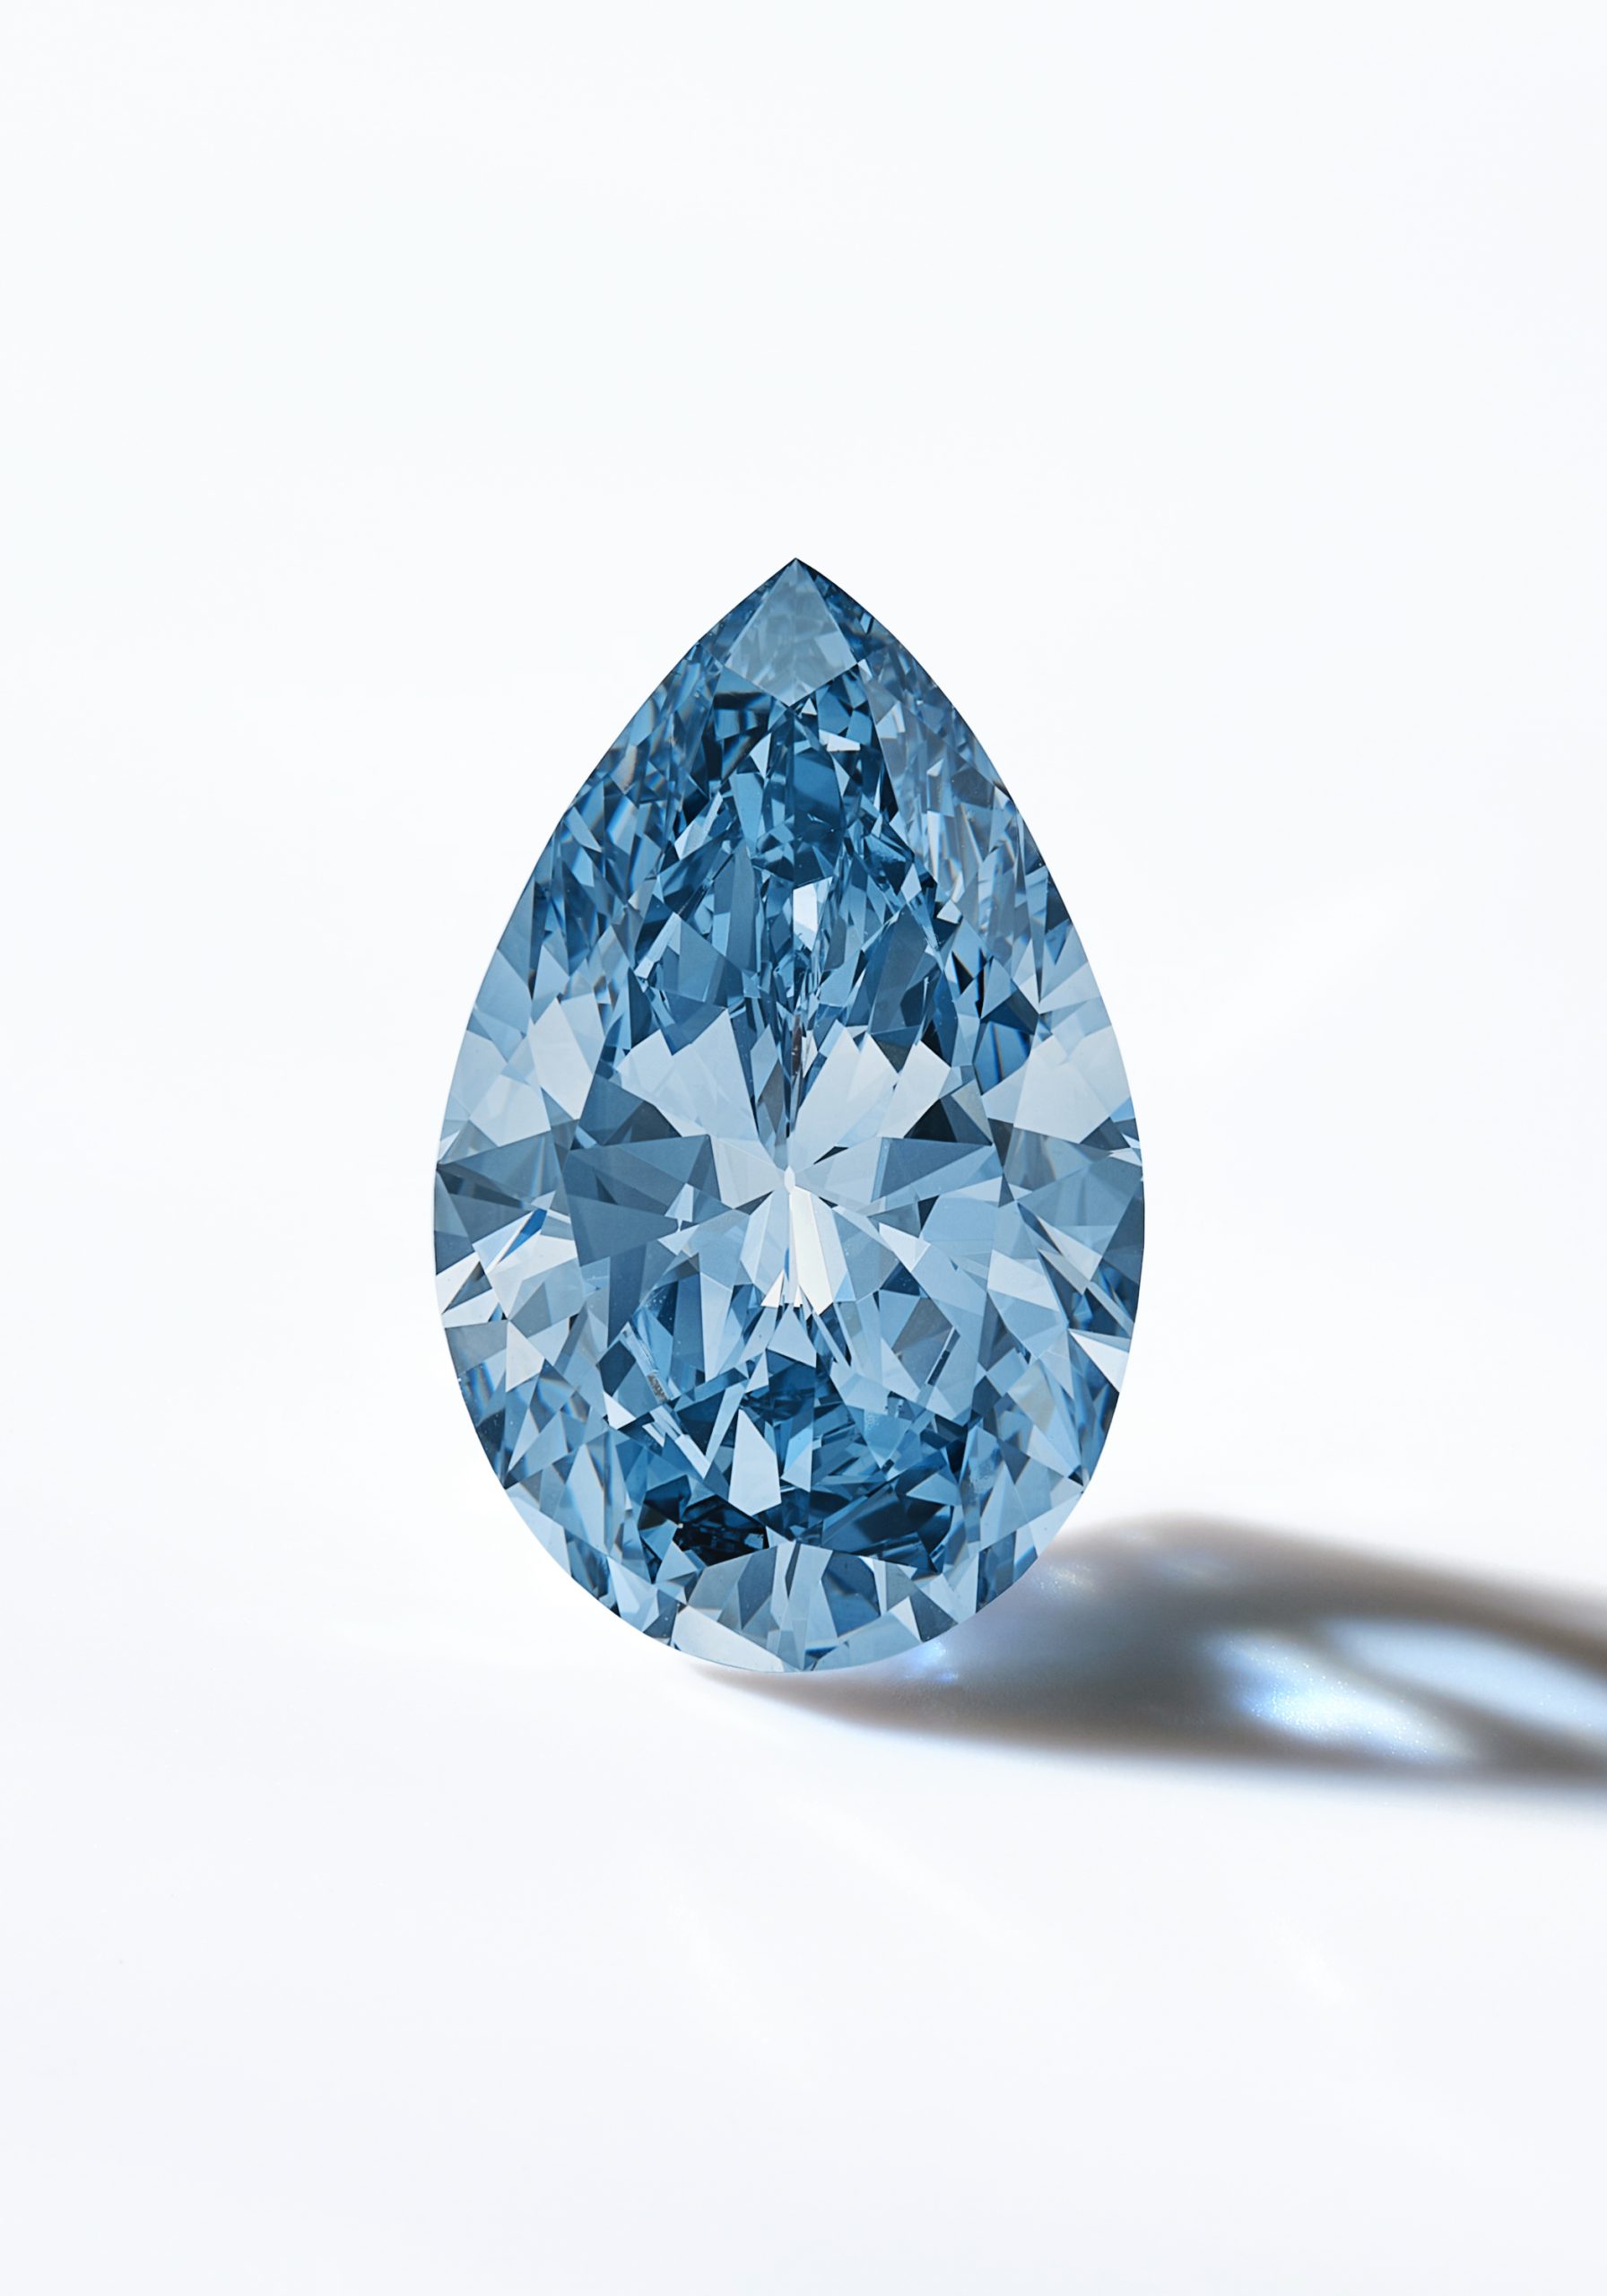 Bulgari Laguna Blu, 11.16 carats, To be sold at Sotheby's Geneva Luxury Week (1)